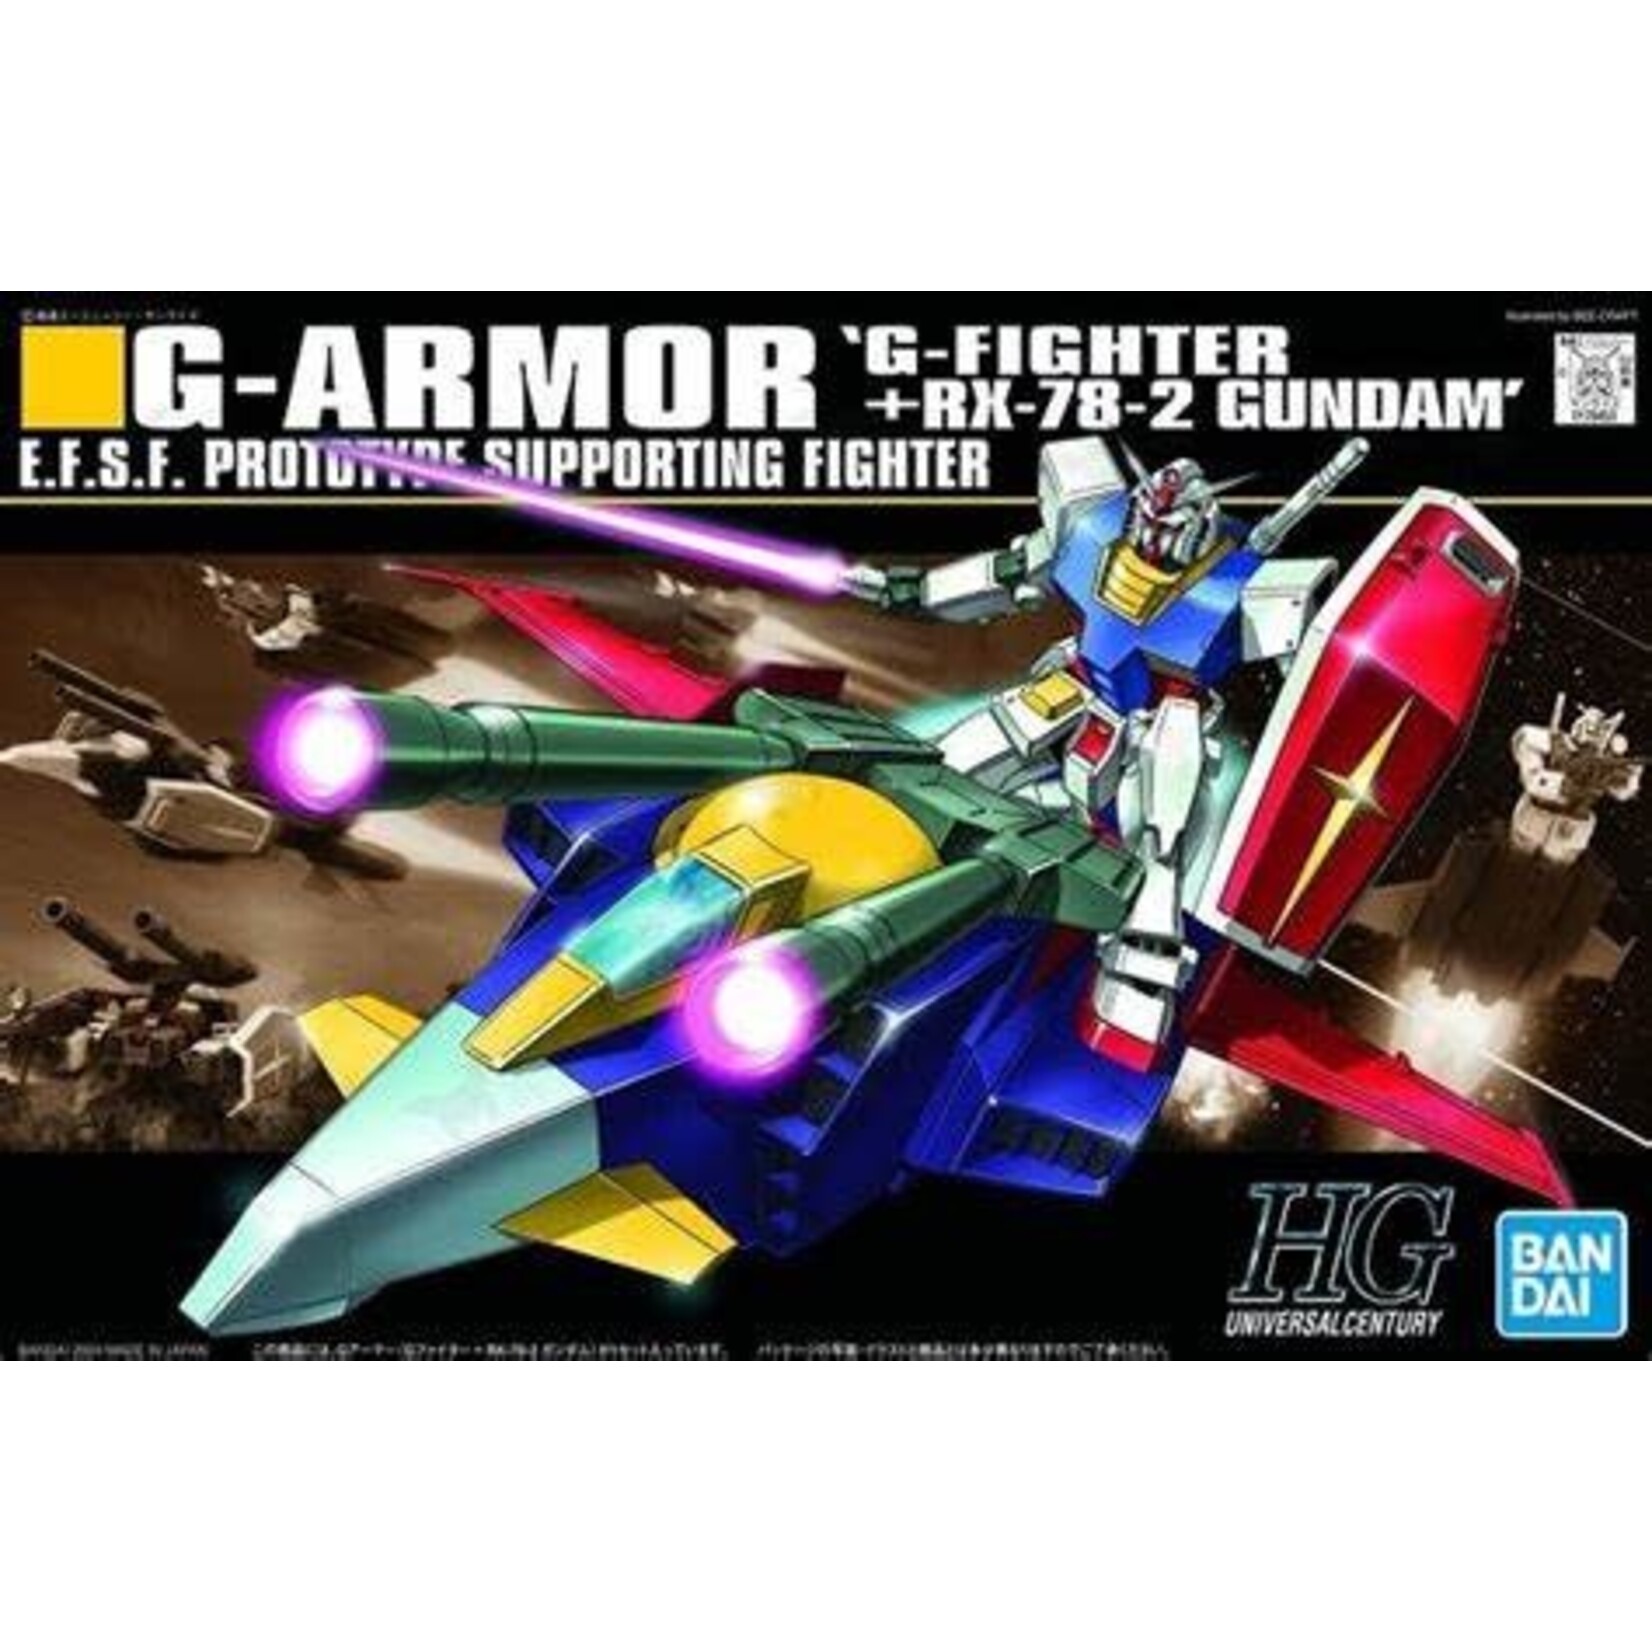 Bandai Gundam G-Armor 'G-Fighter+RX-78-2 Gundam': E.F.S.F. Prototype Supporting Fighter